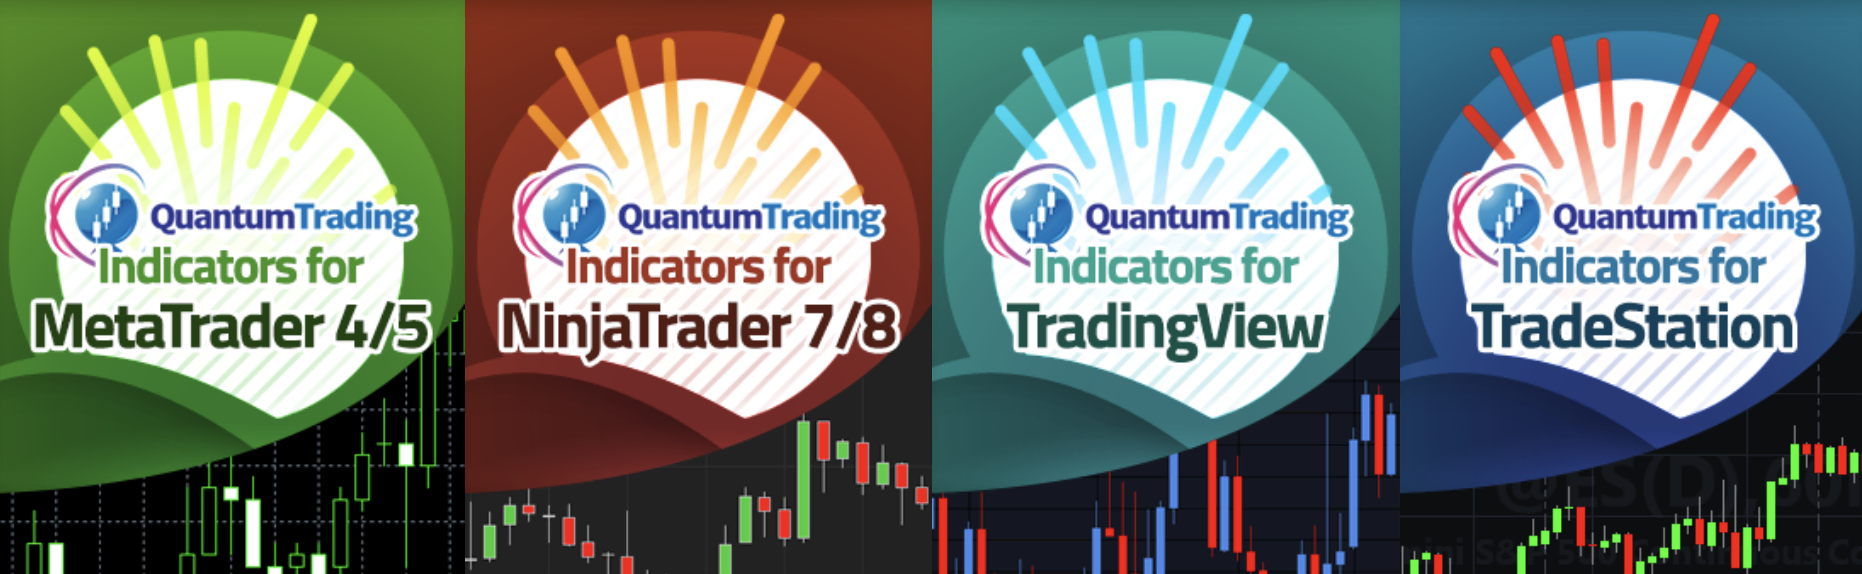 Indicateurs disponibles sur Quantum Trading